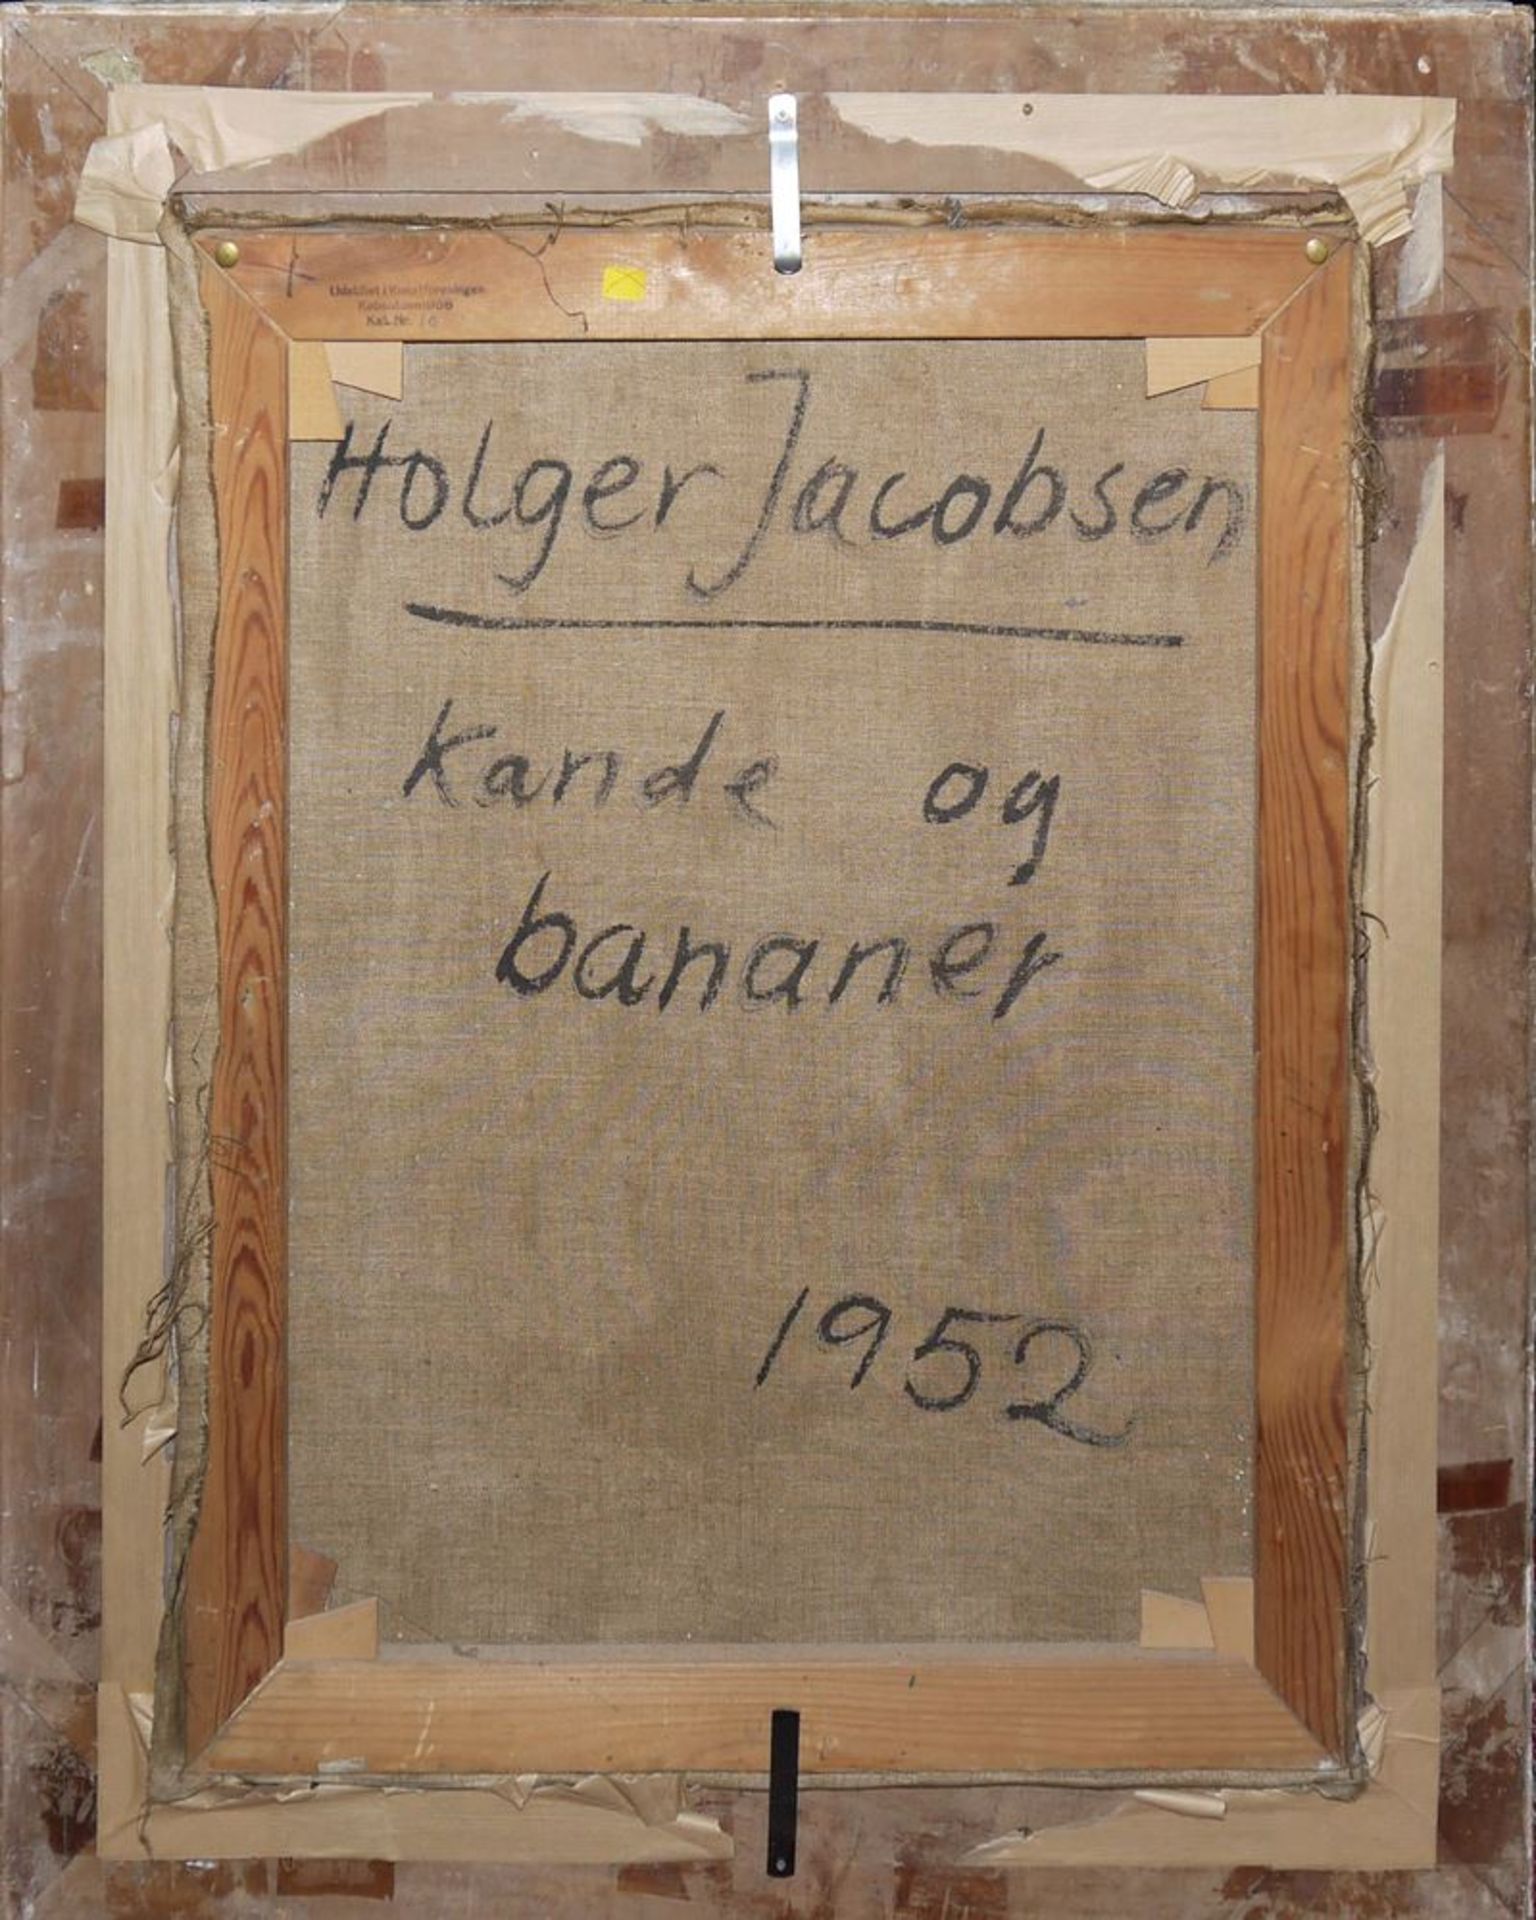 Holger Jacobsen, "Kande og bananer", Ölgemälde von 1952 - Bild 2 aus 3